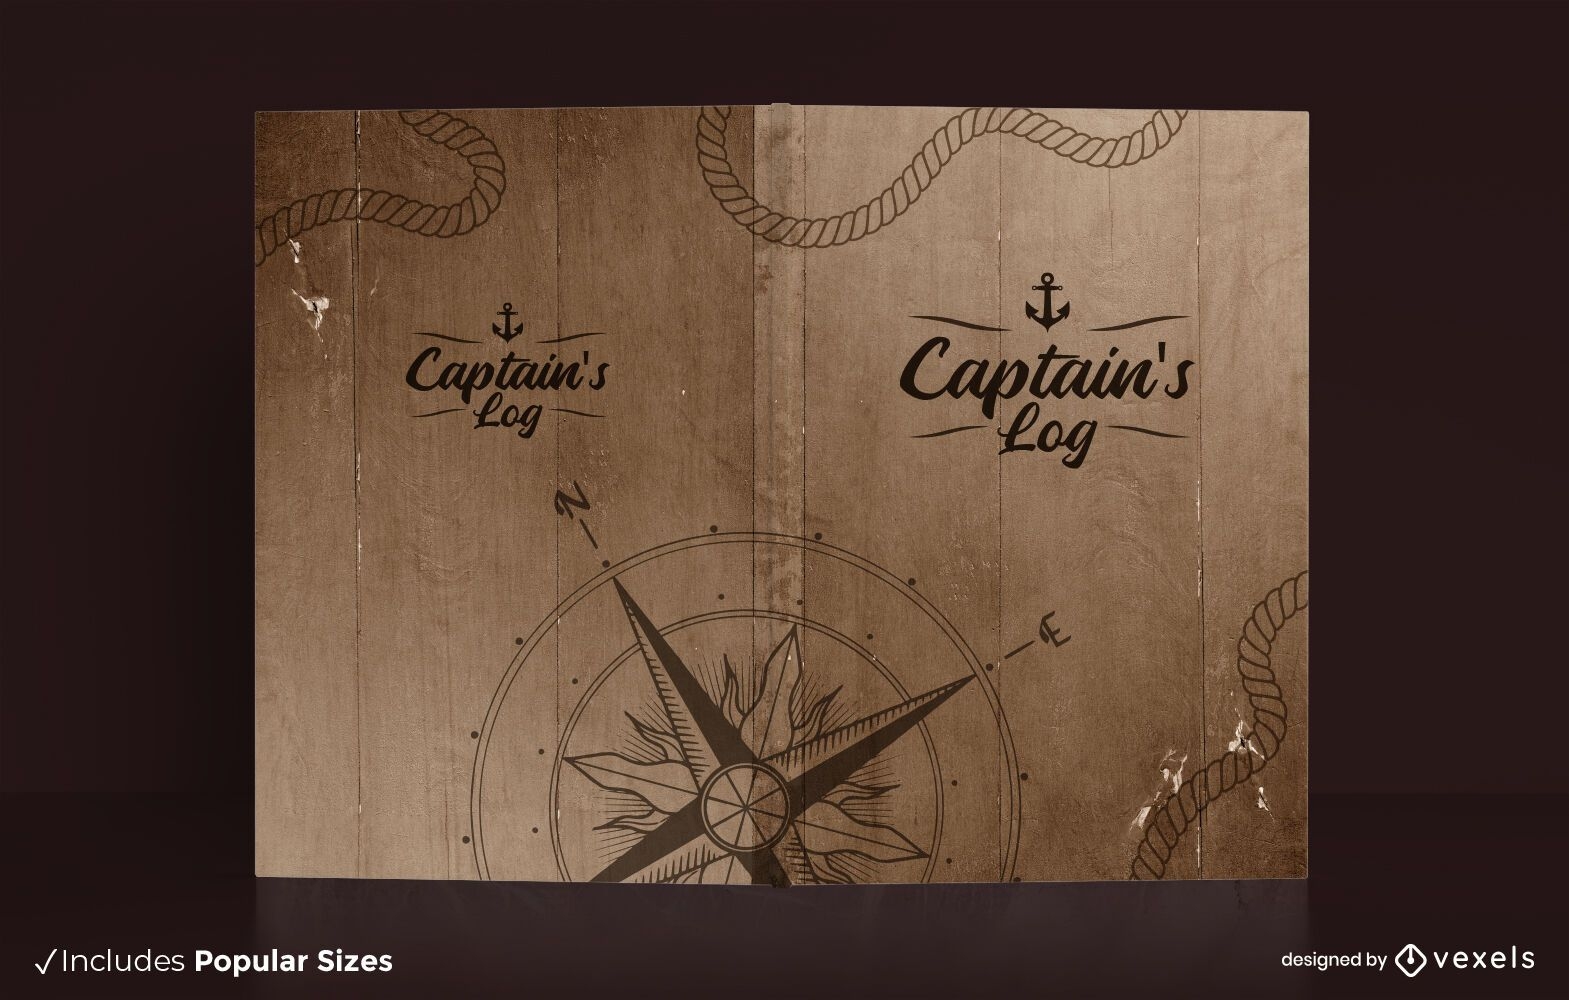 Captain's log book cover design